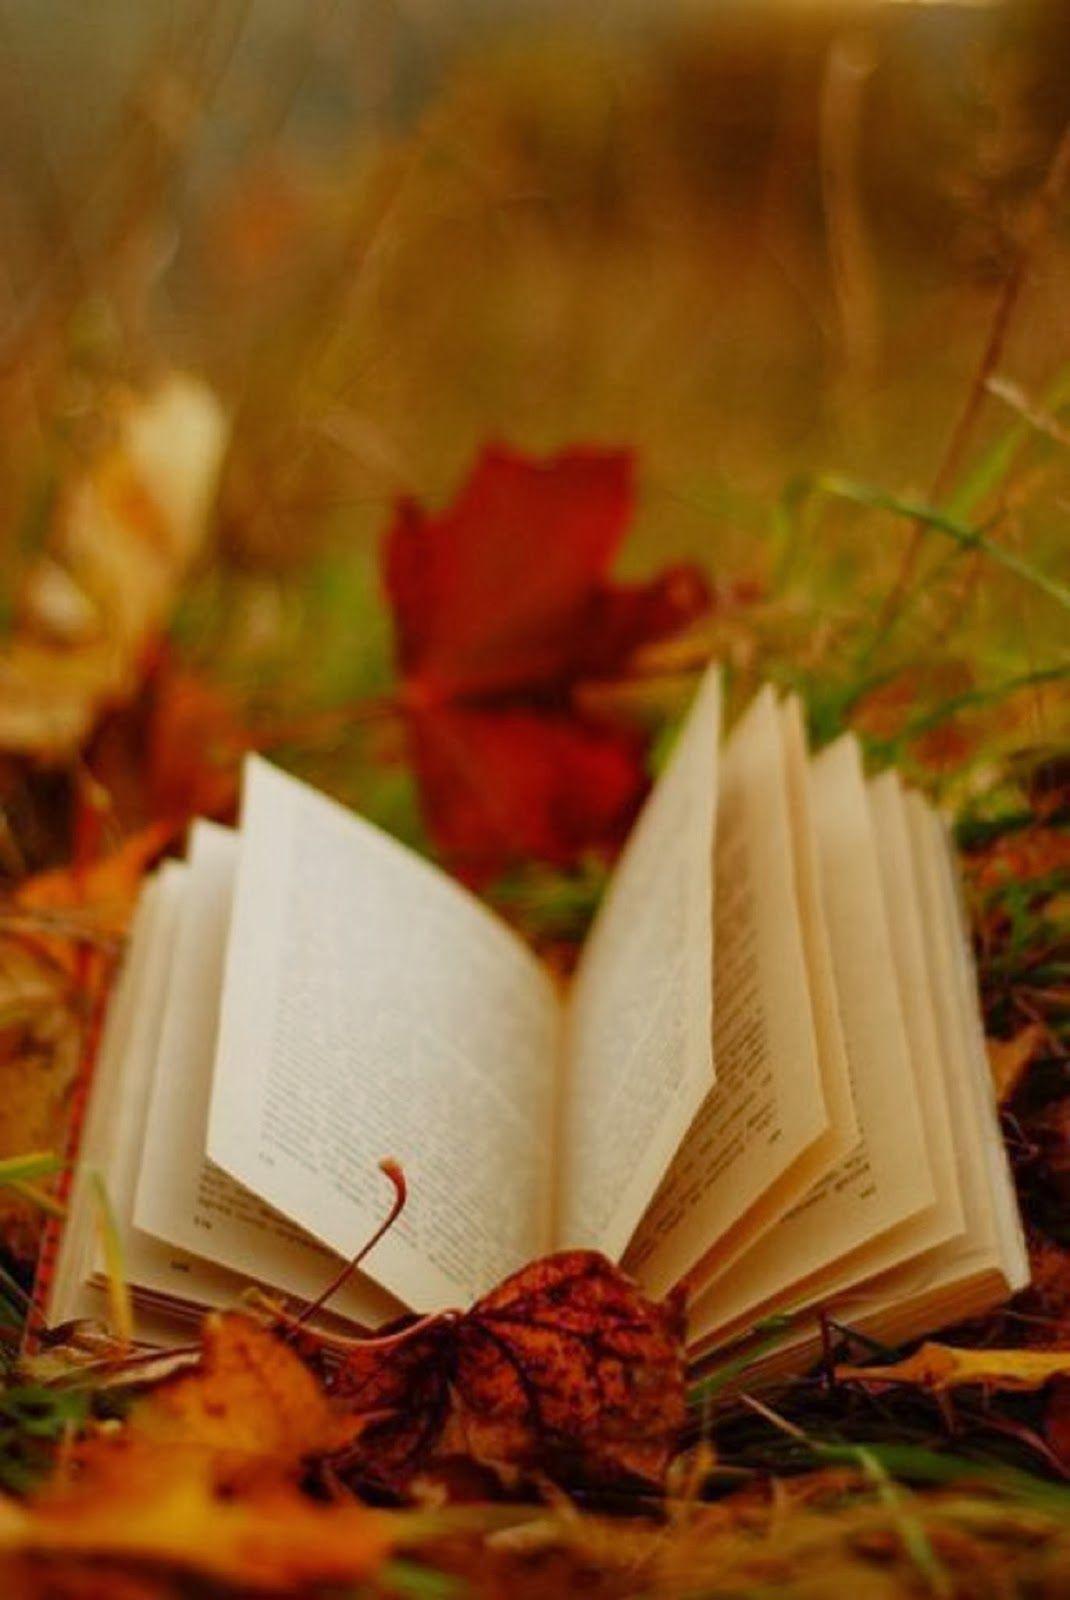 Autumn Book. Autumn Image. Autumn, Books and Book